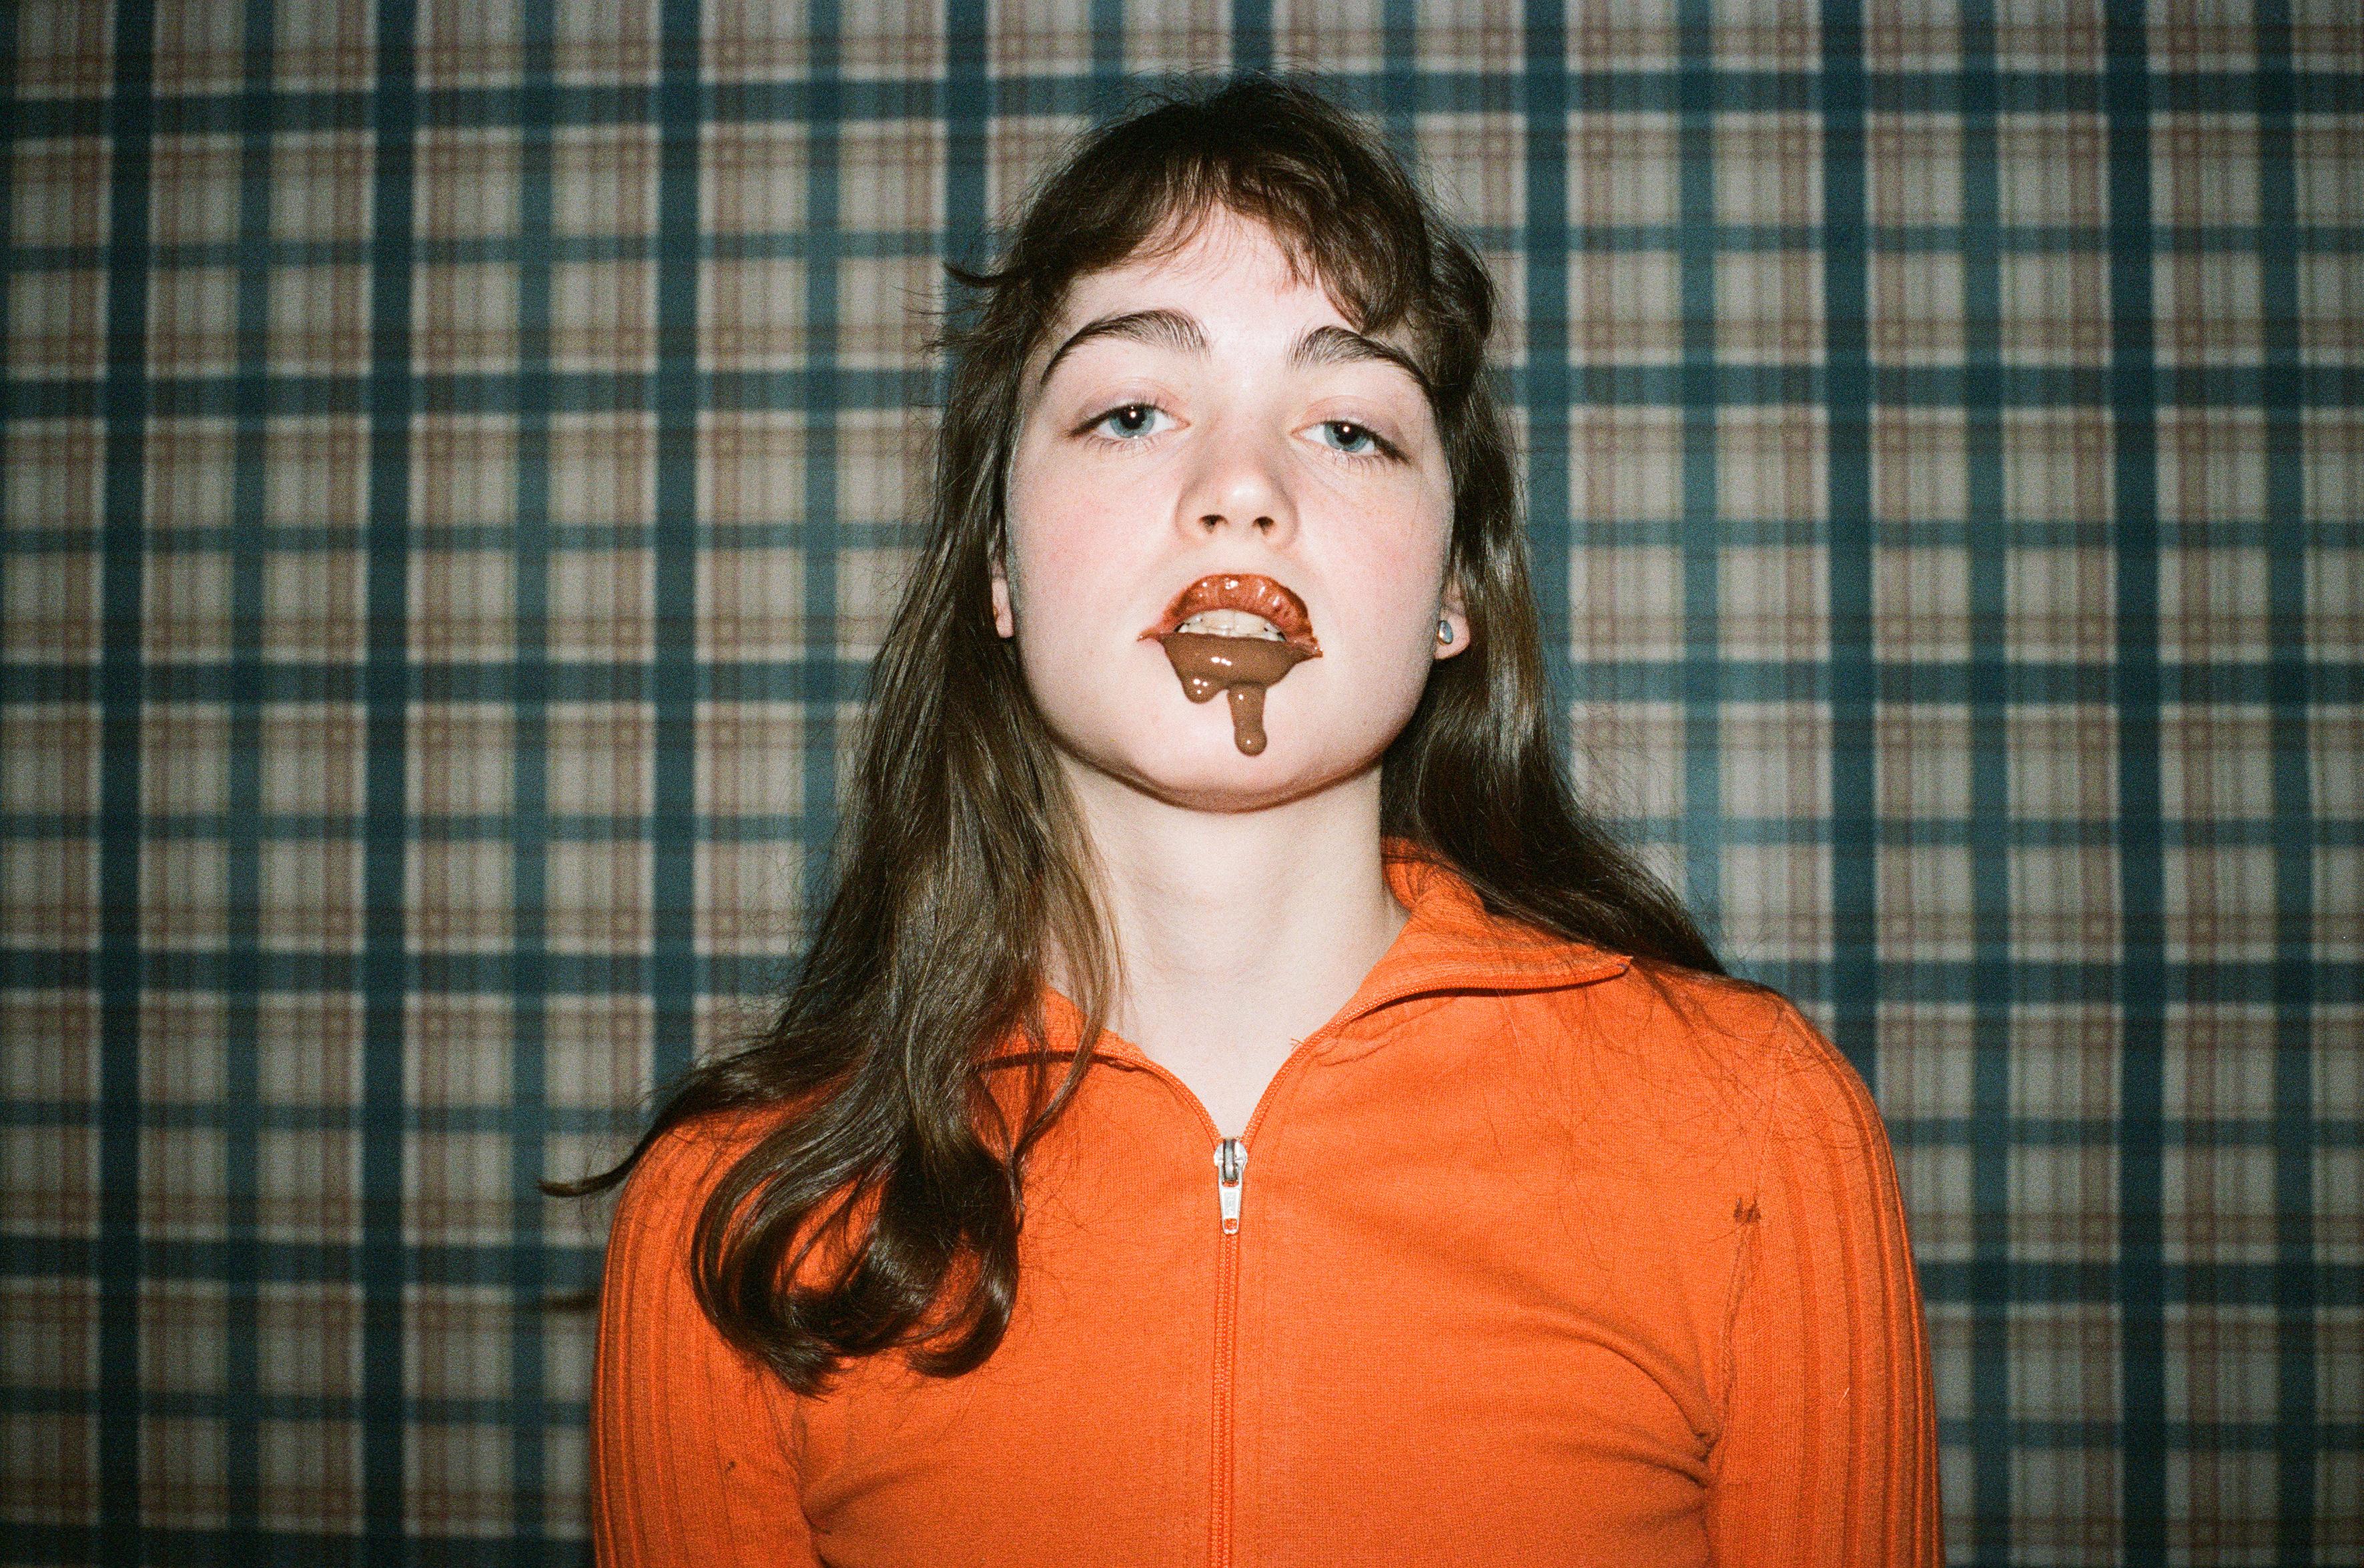 Ryan Mendoza Portrait Photograph - Lara with pudding